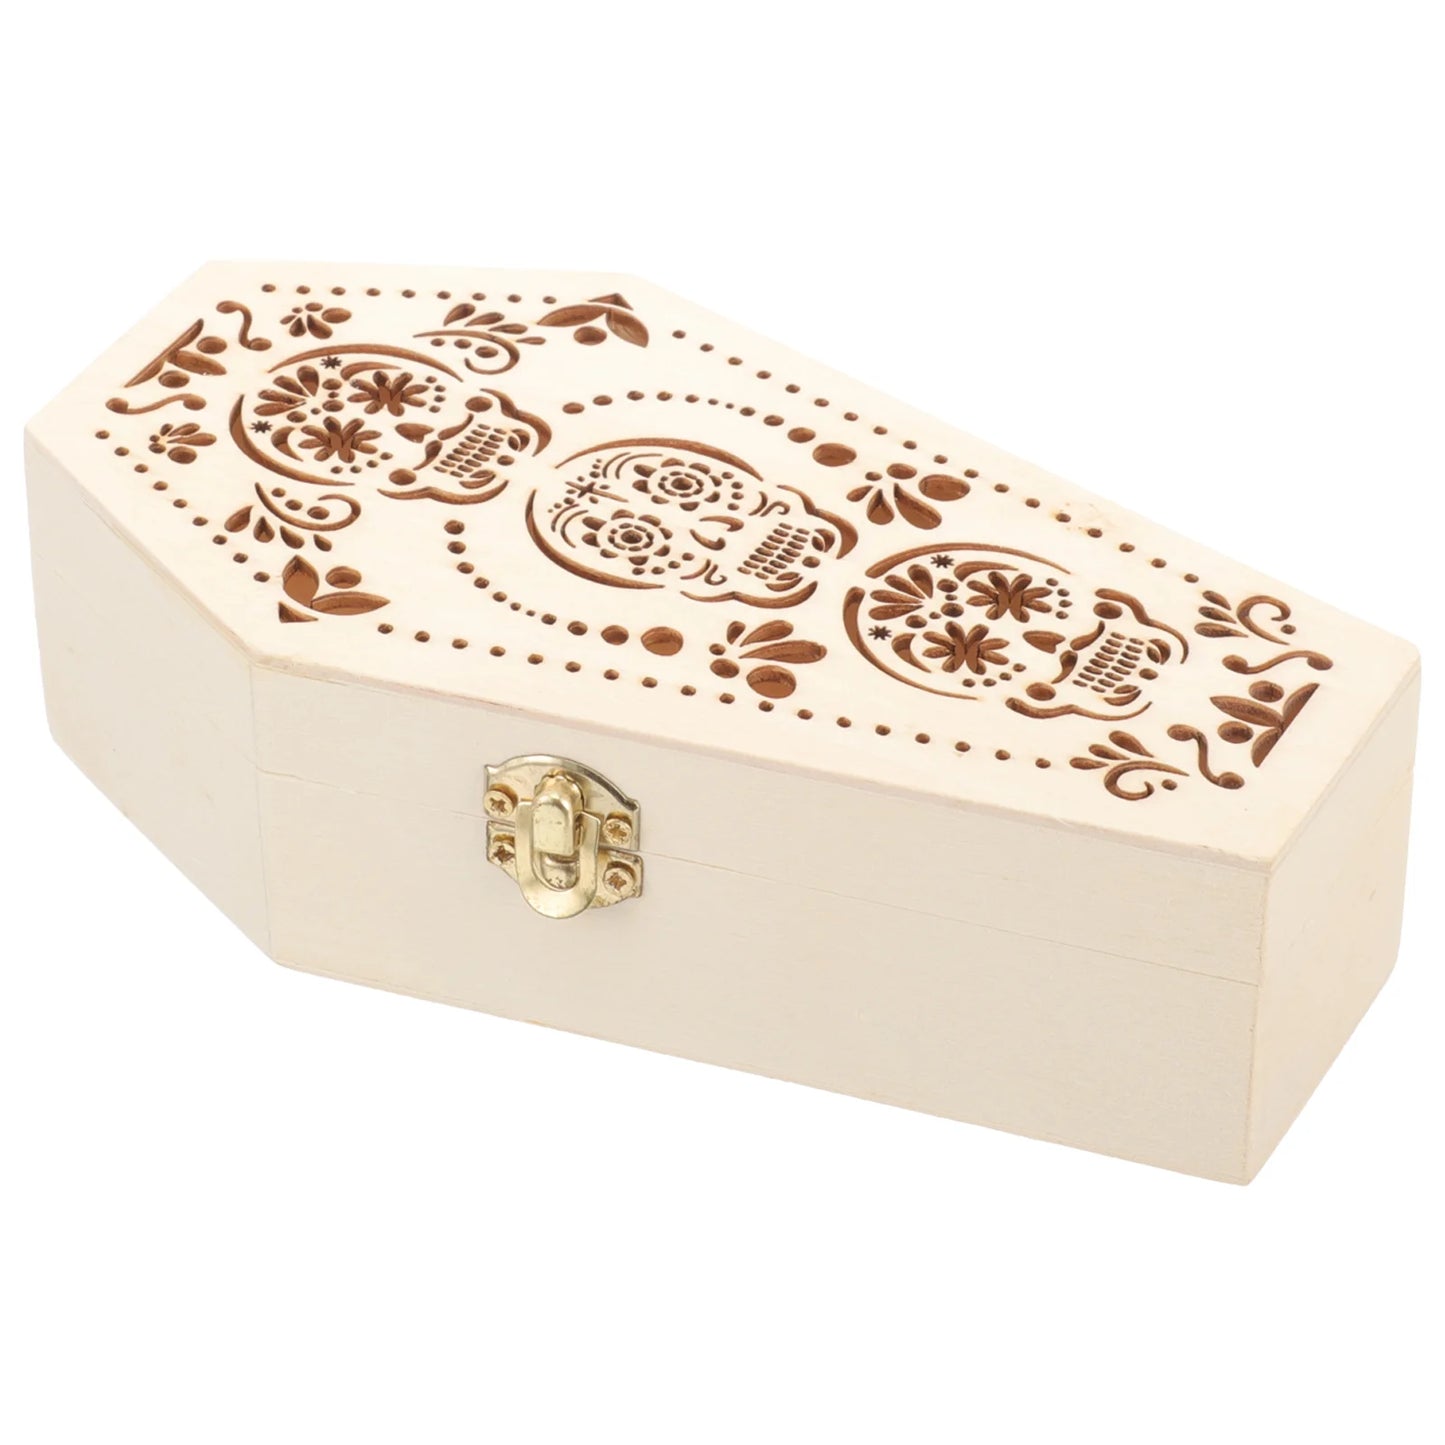 Halloween Coffin Treat Box Hinge Lid Sugar Unfinished Wood Sugar Skulls Candy Box